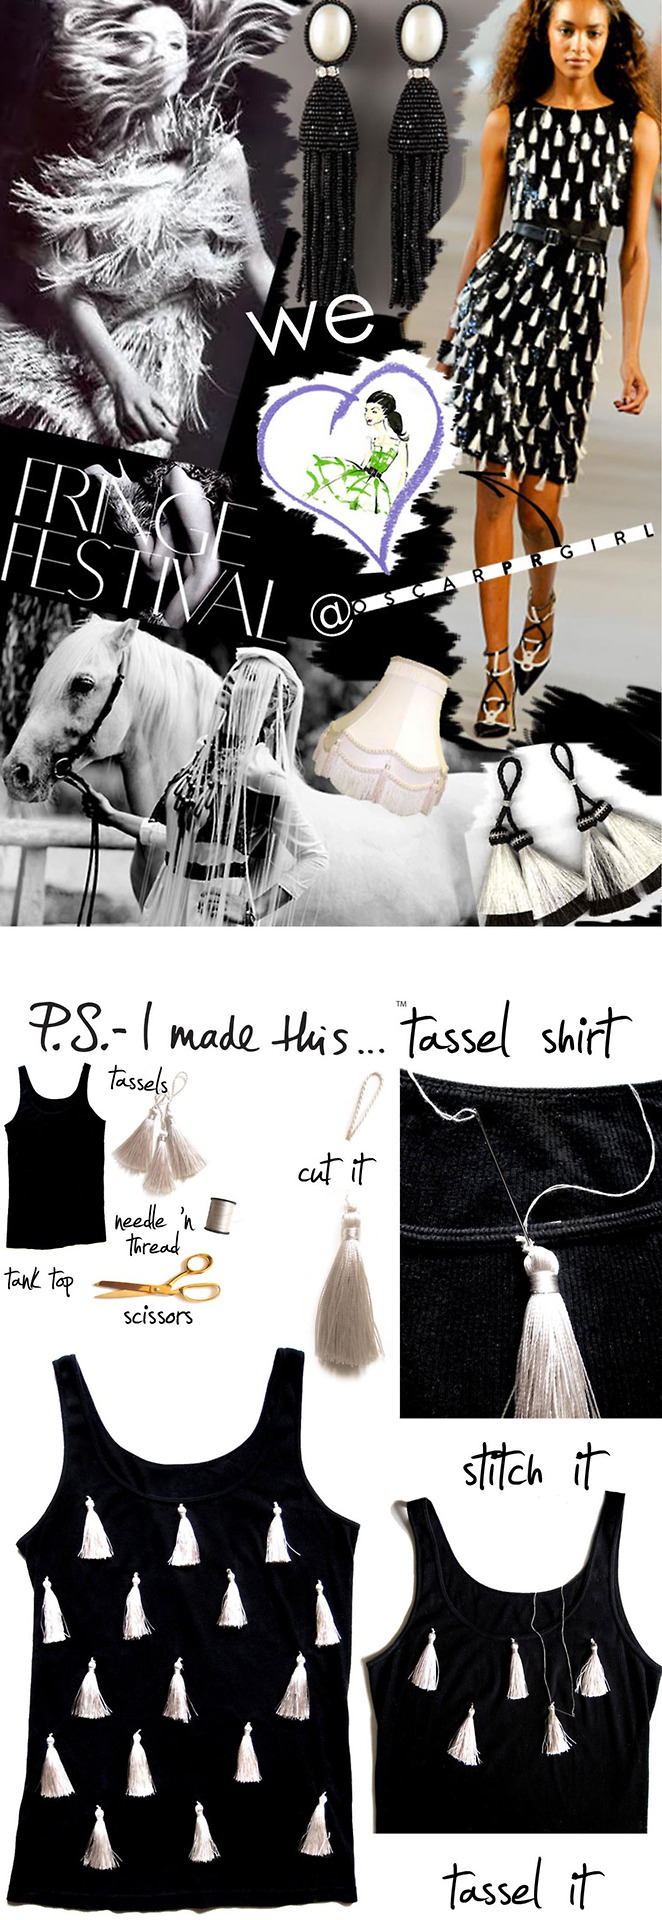 17 DIY Fashion Tassel Projects